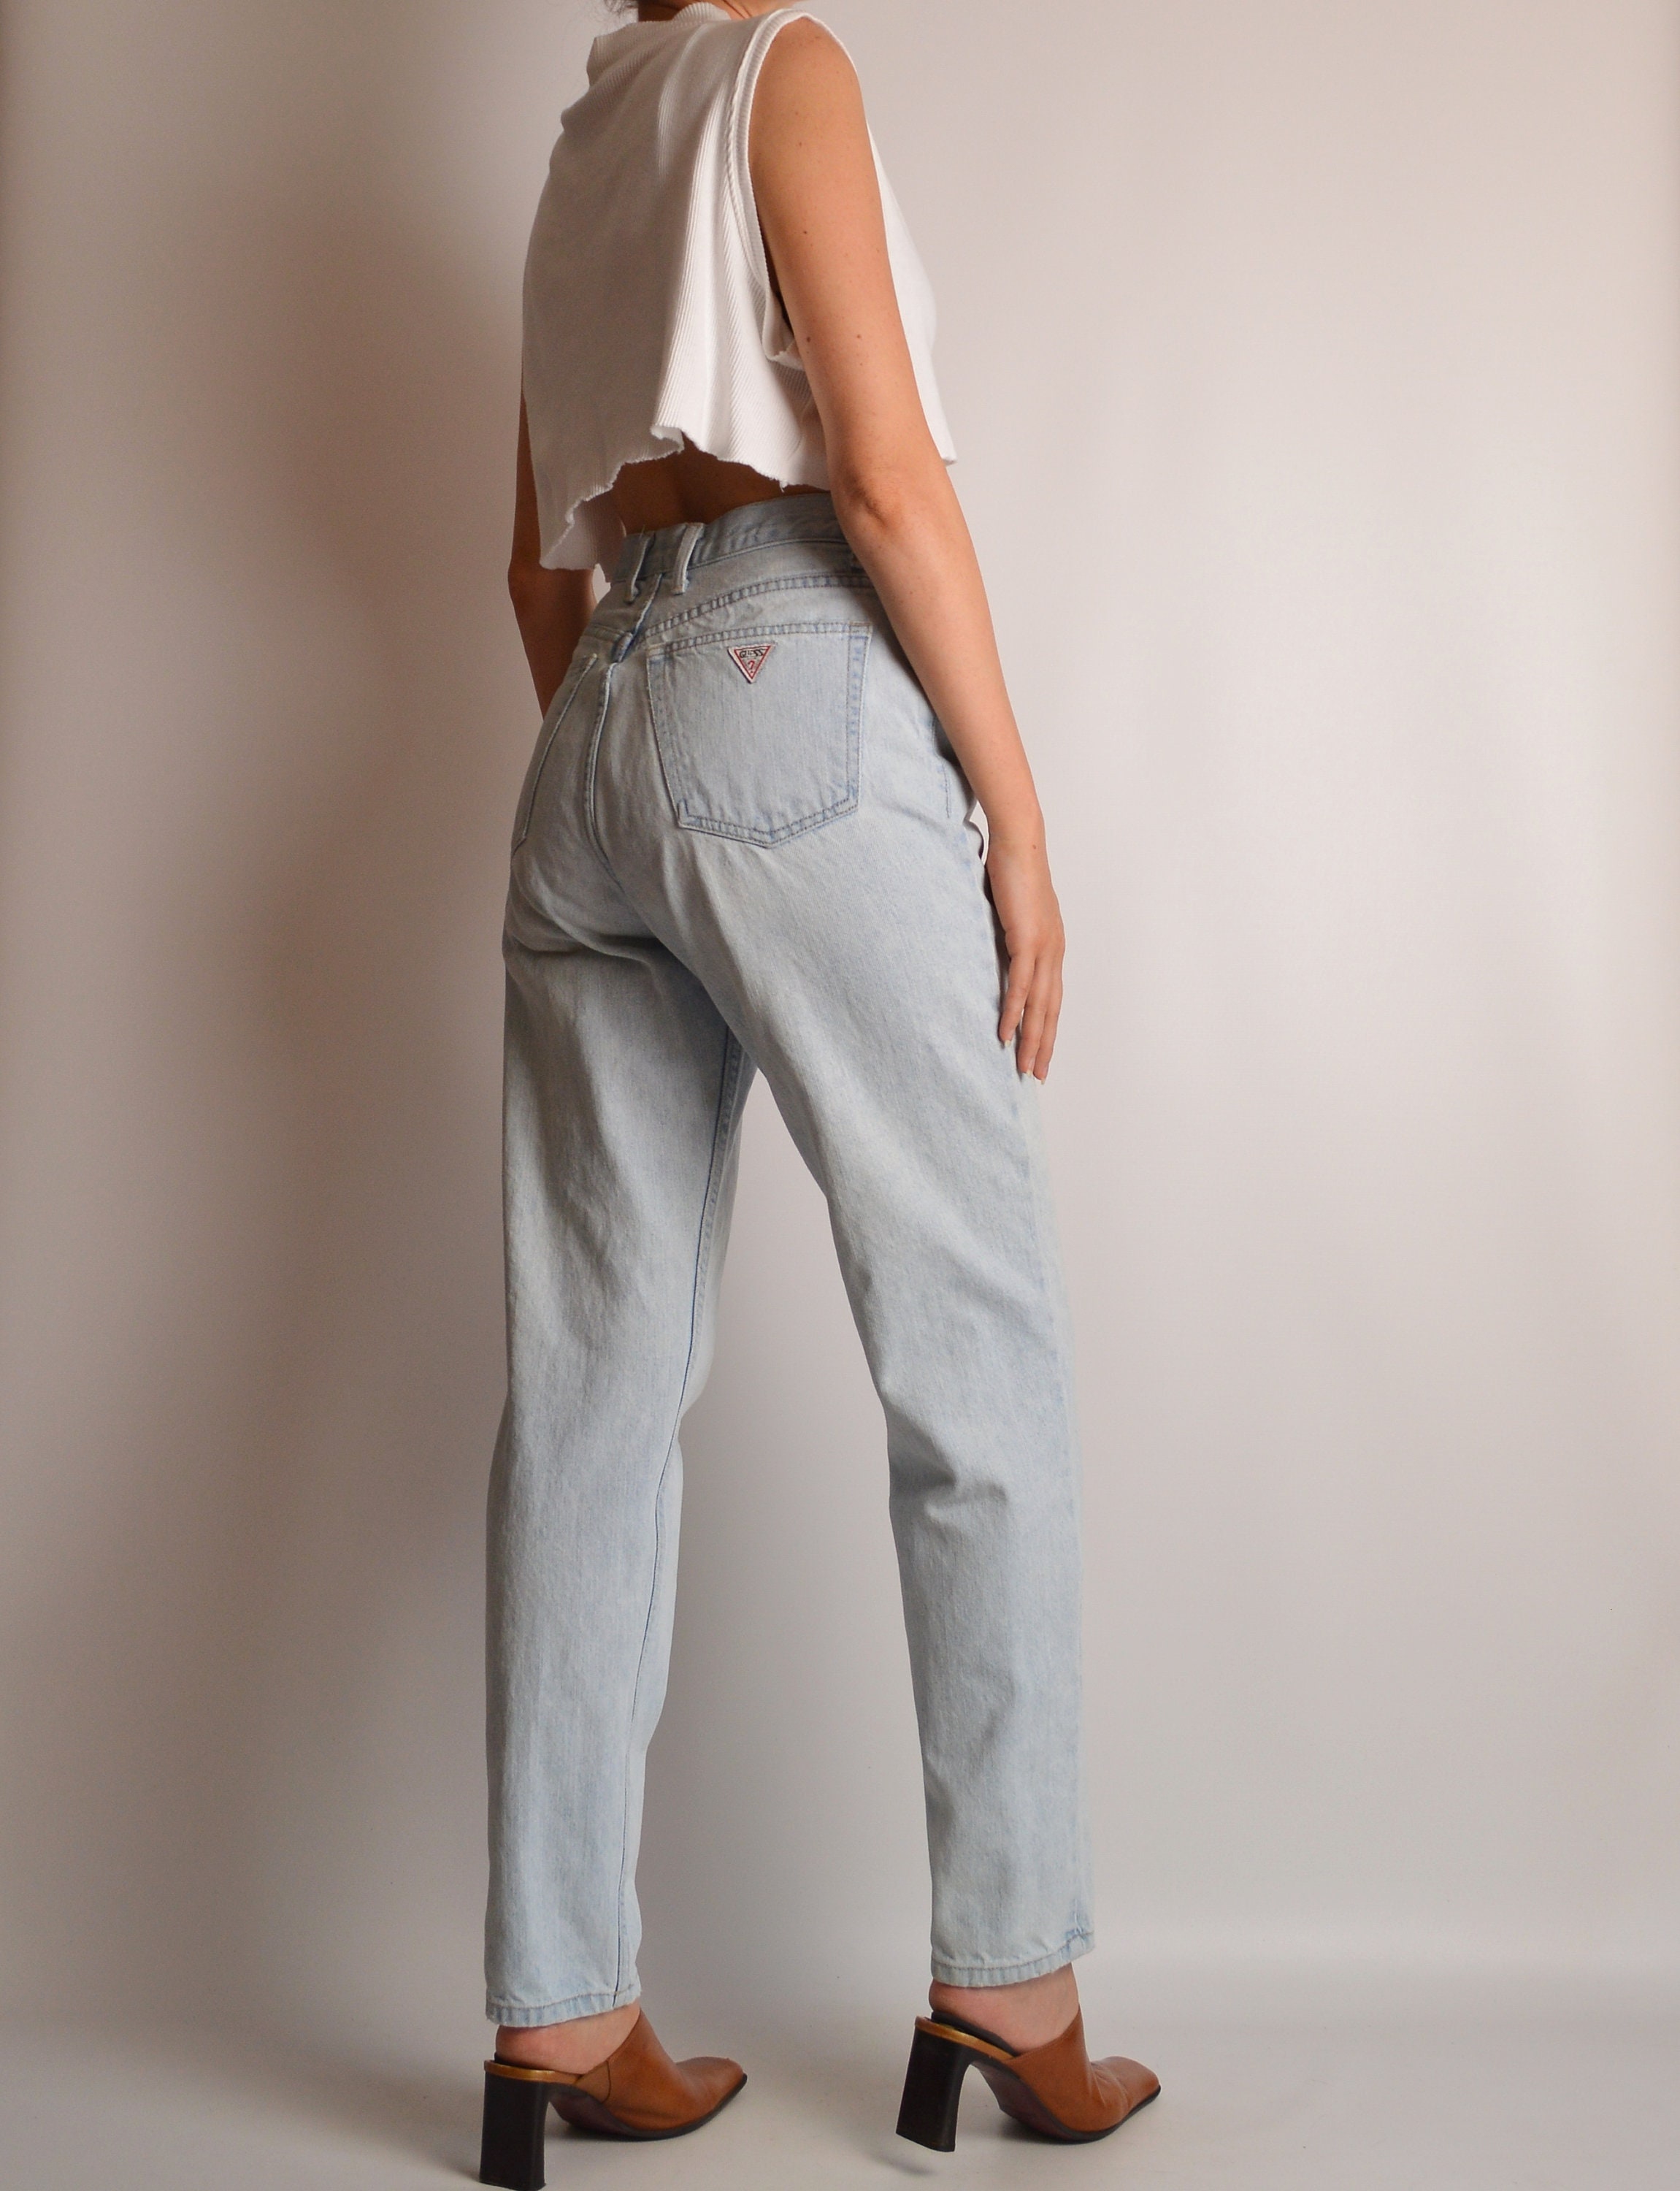 Vintage GUESS Jeans (27W) high waist / light wash